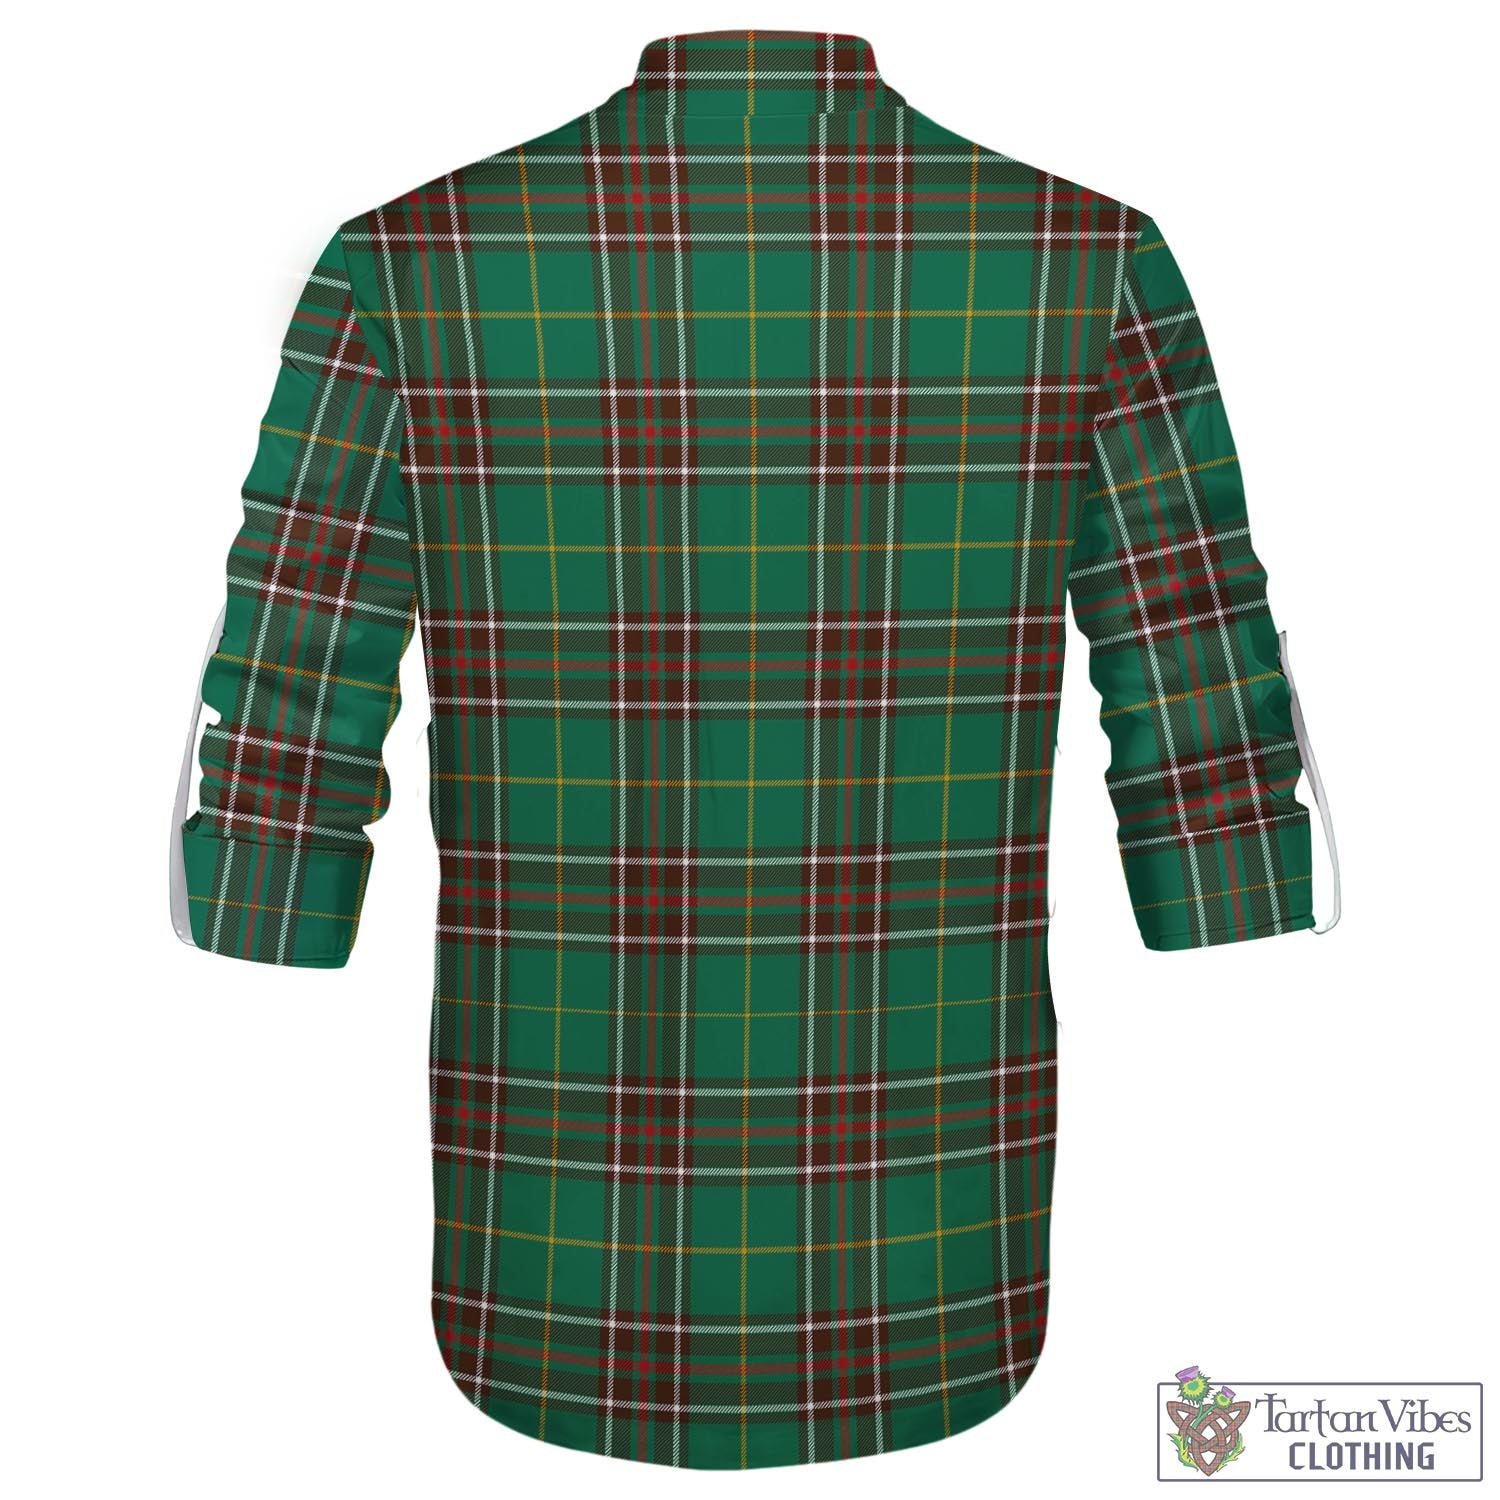 Tartan Vibes Clothing Newfoundland And Labrador Province Canada Tartan Men's Scottish Traditional Jacobite Ghillie Kilt Shirt